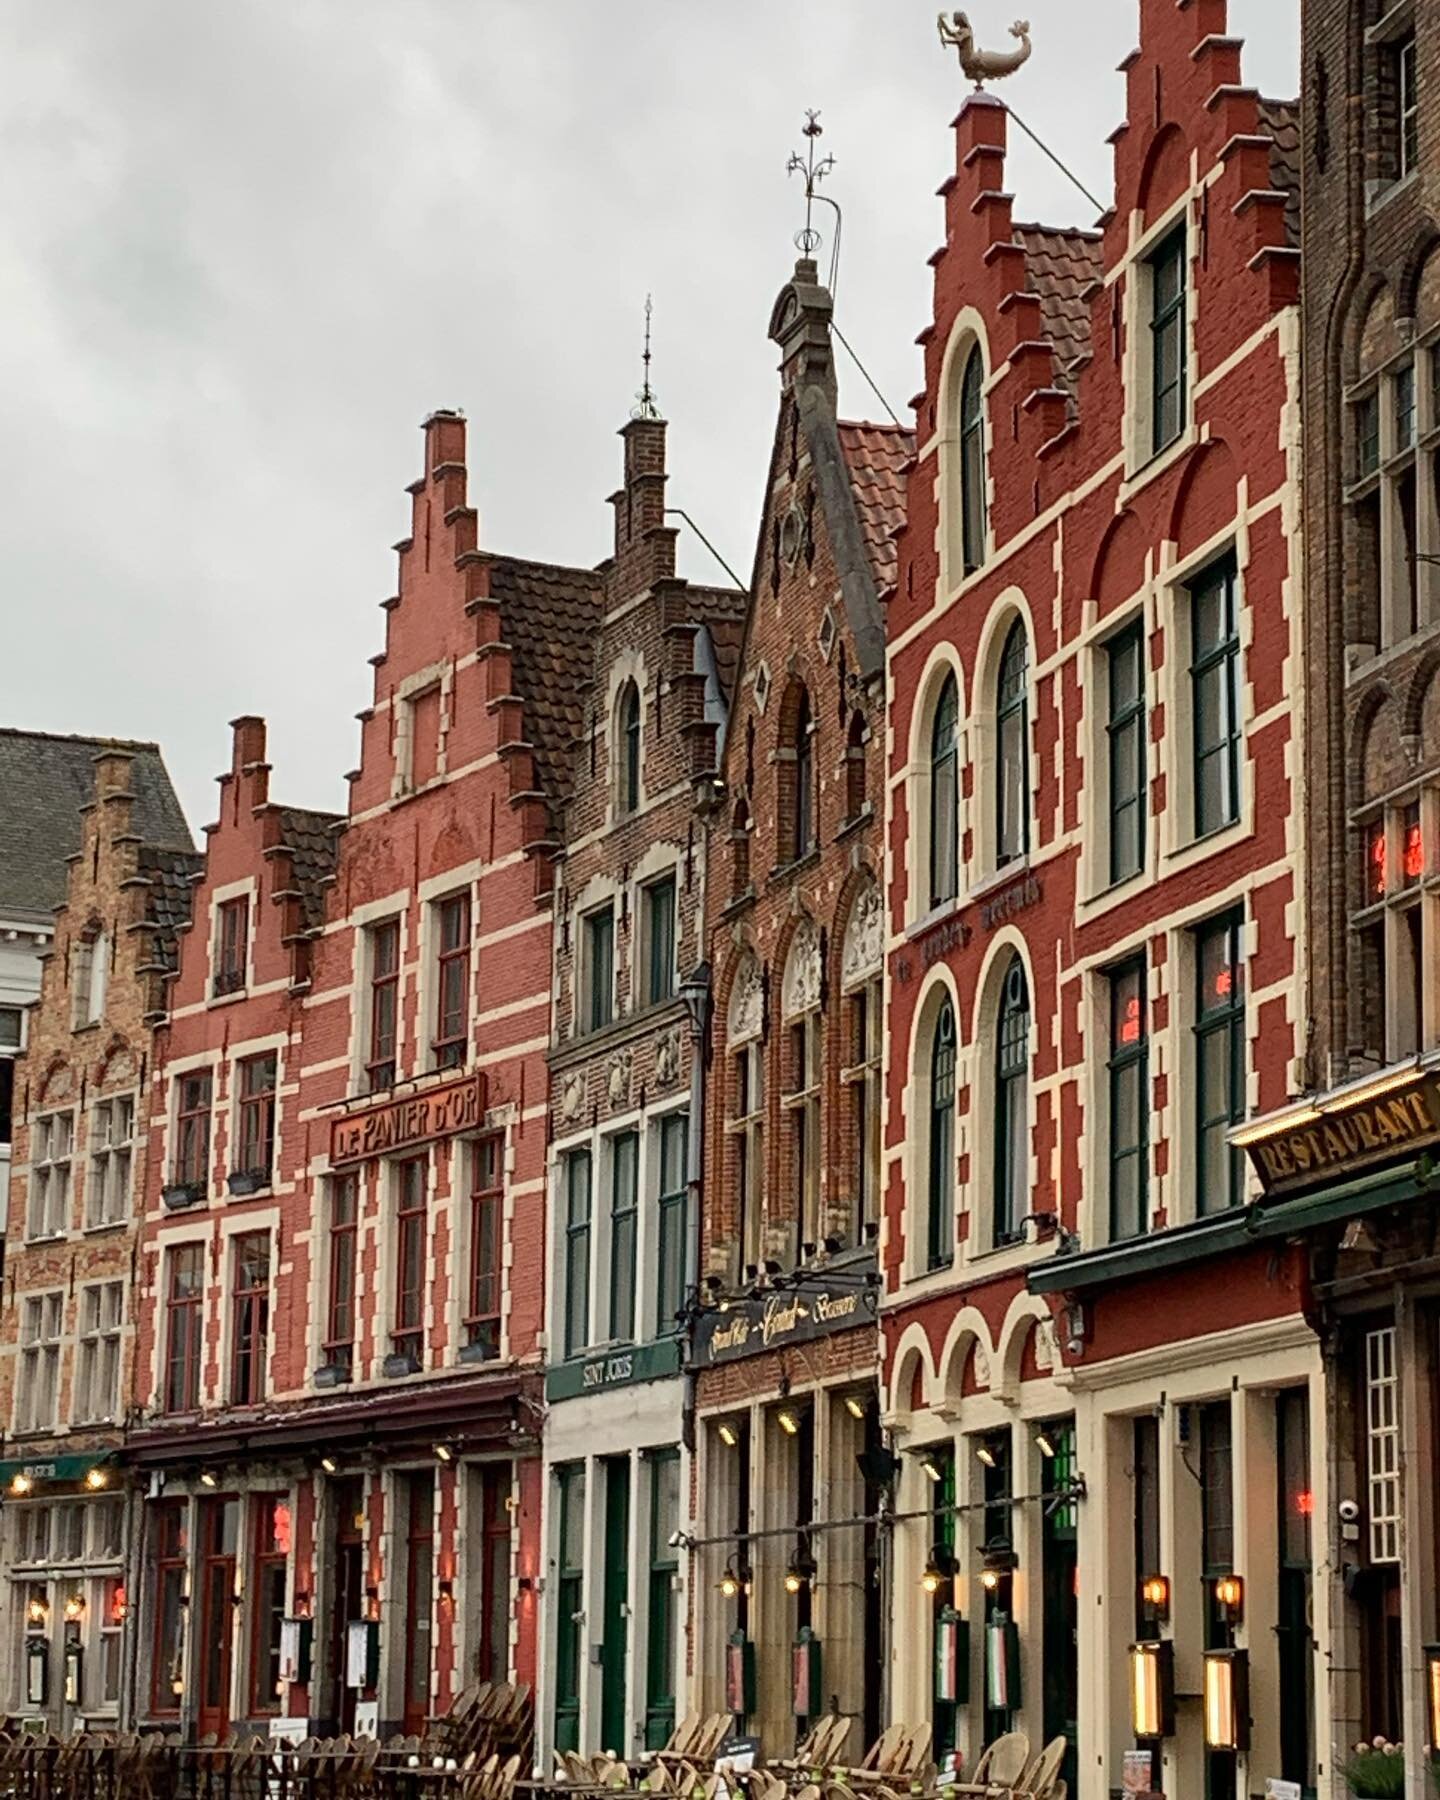 Dear Brugge, you sure are beautiful 😍 #brugge #inbruges #belgium #europe #europetravel #eurotrip #travel #worldtravel #worldtraveler #wanderlust #wandersnevercease